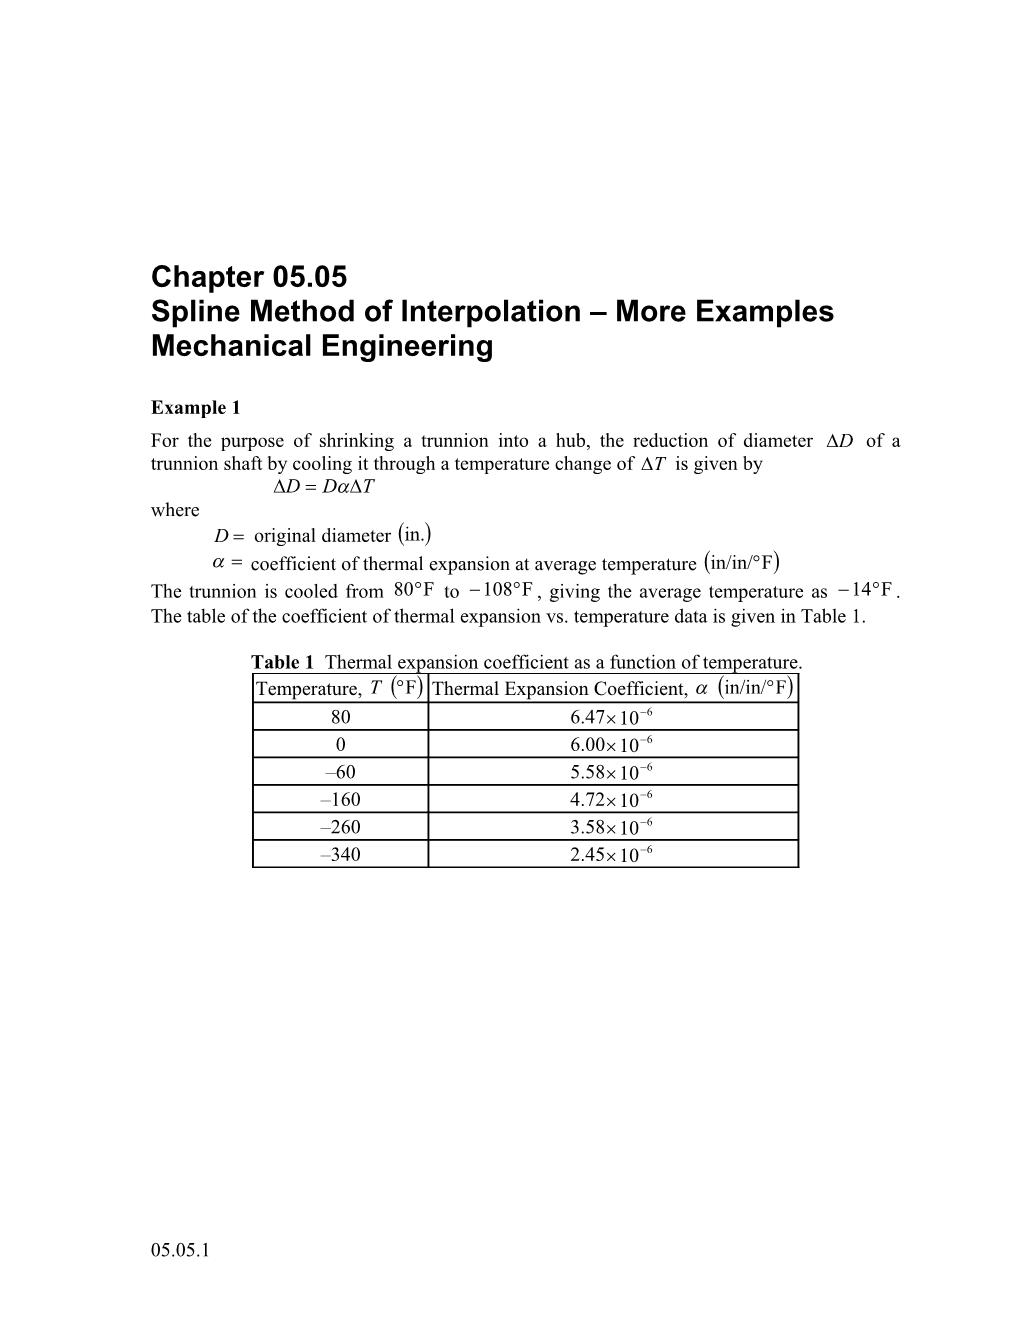 Spline Method of Interpolation-More Examples: Mechanical Engineering